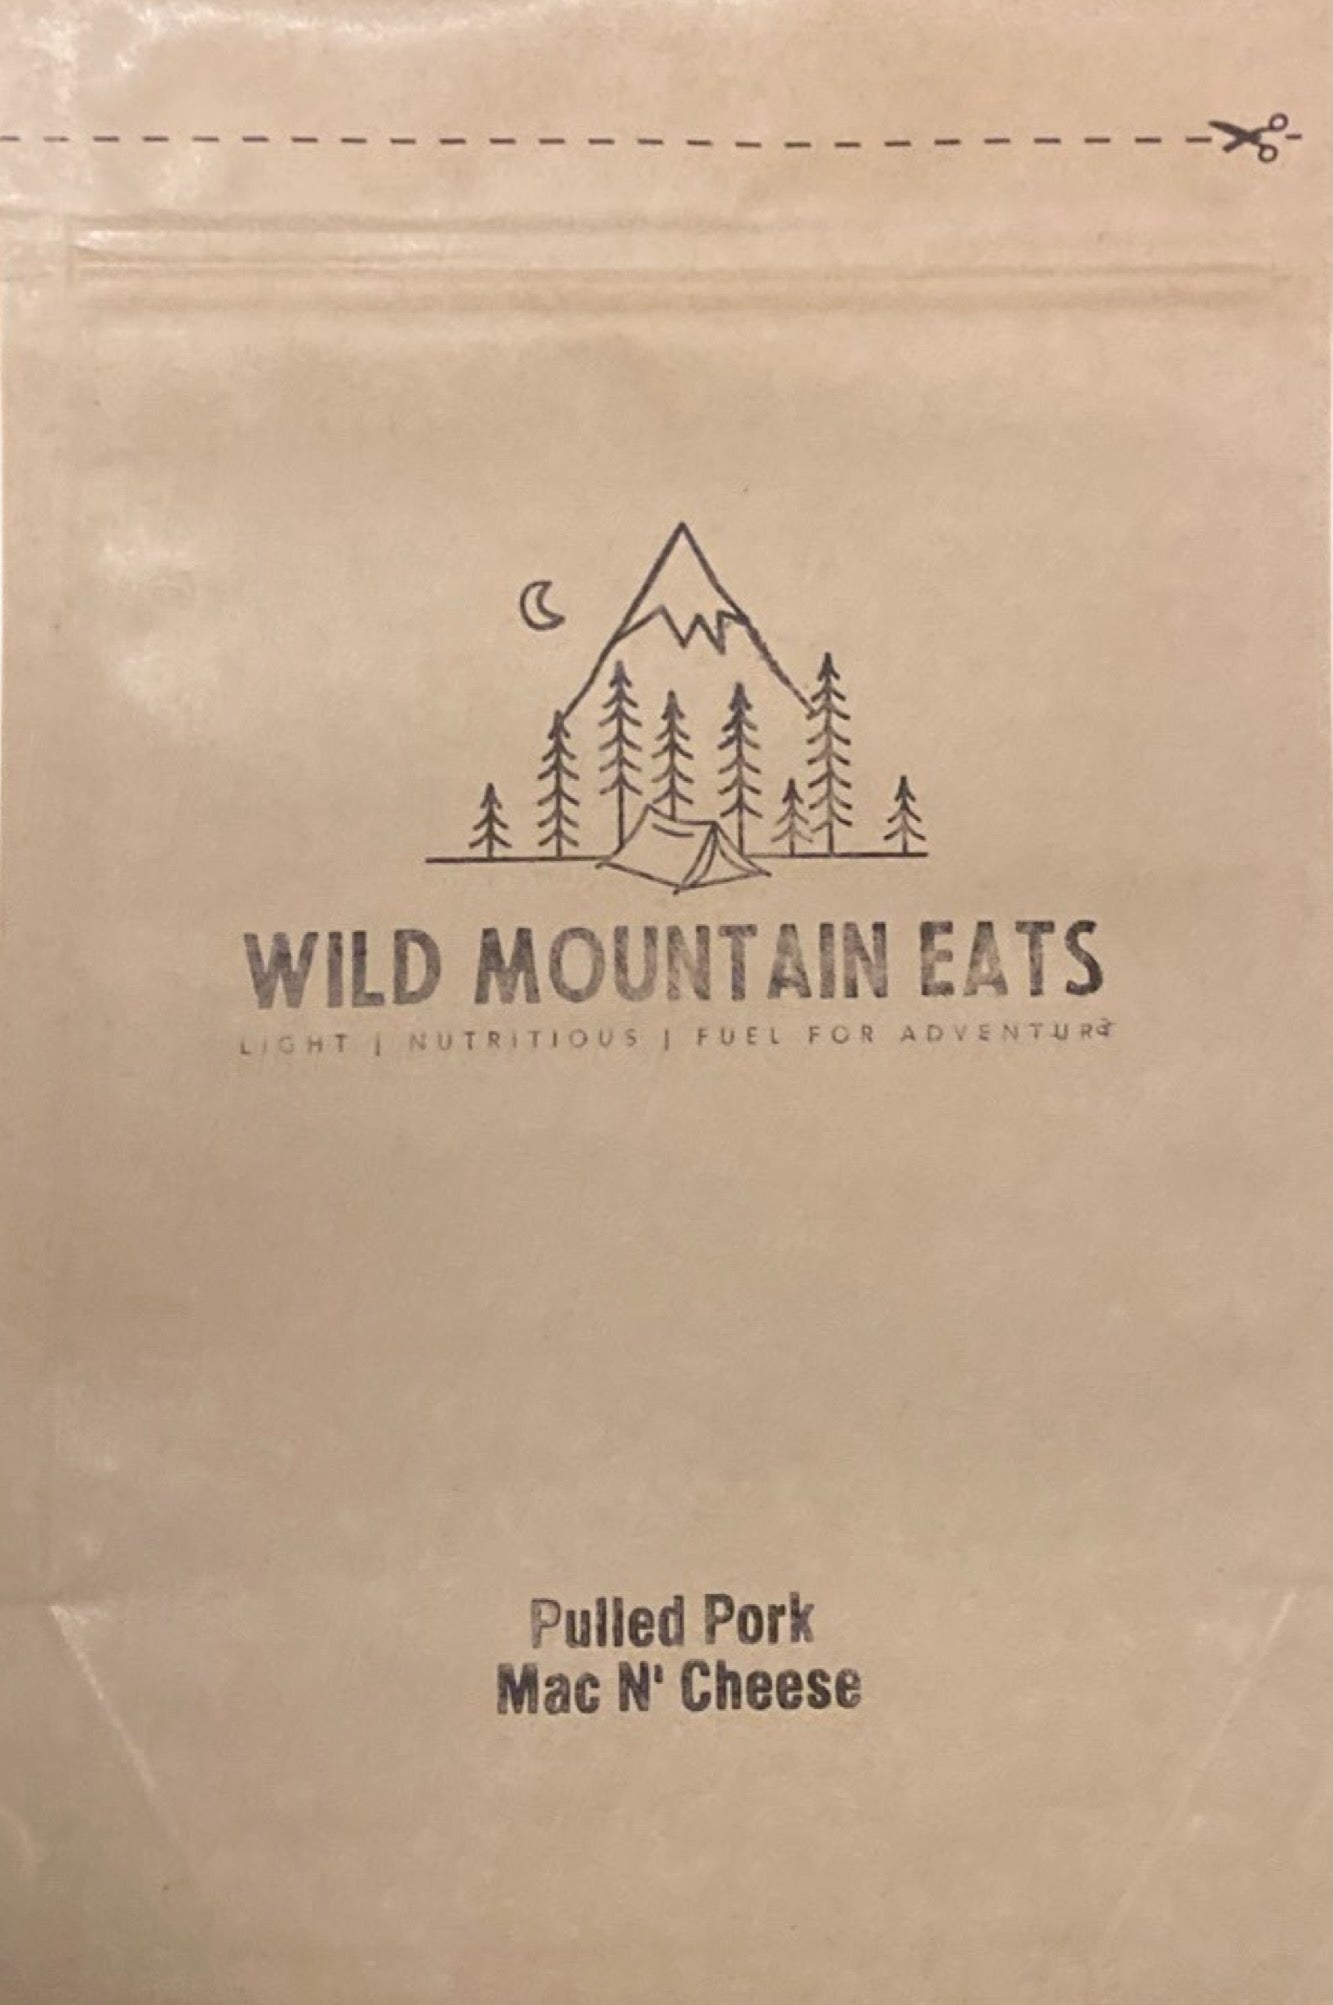 Wild Mountain Eats - Pulled Pork Mac N' Cheese